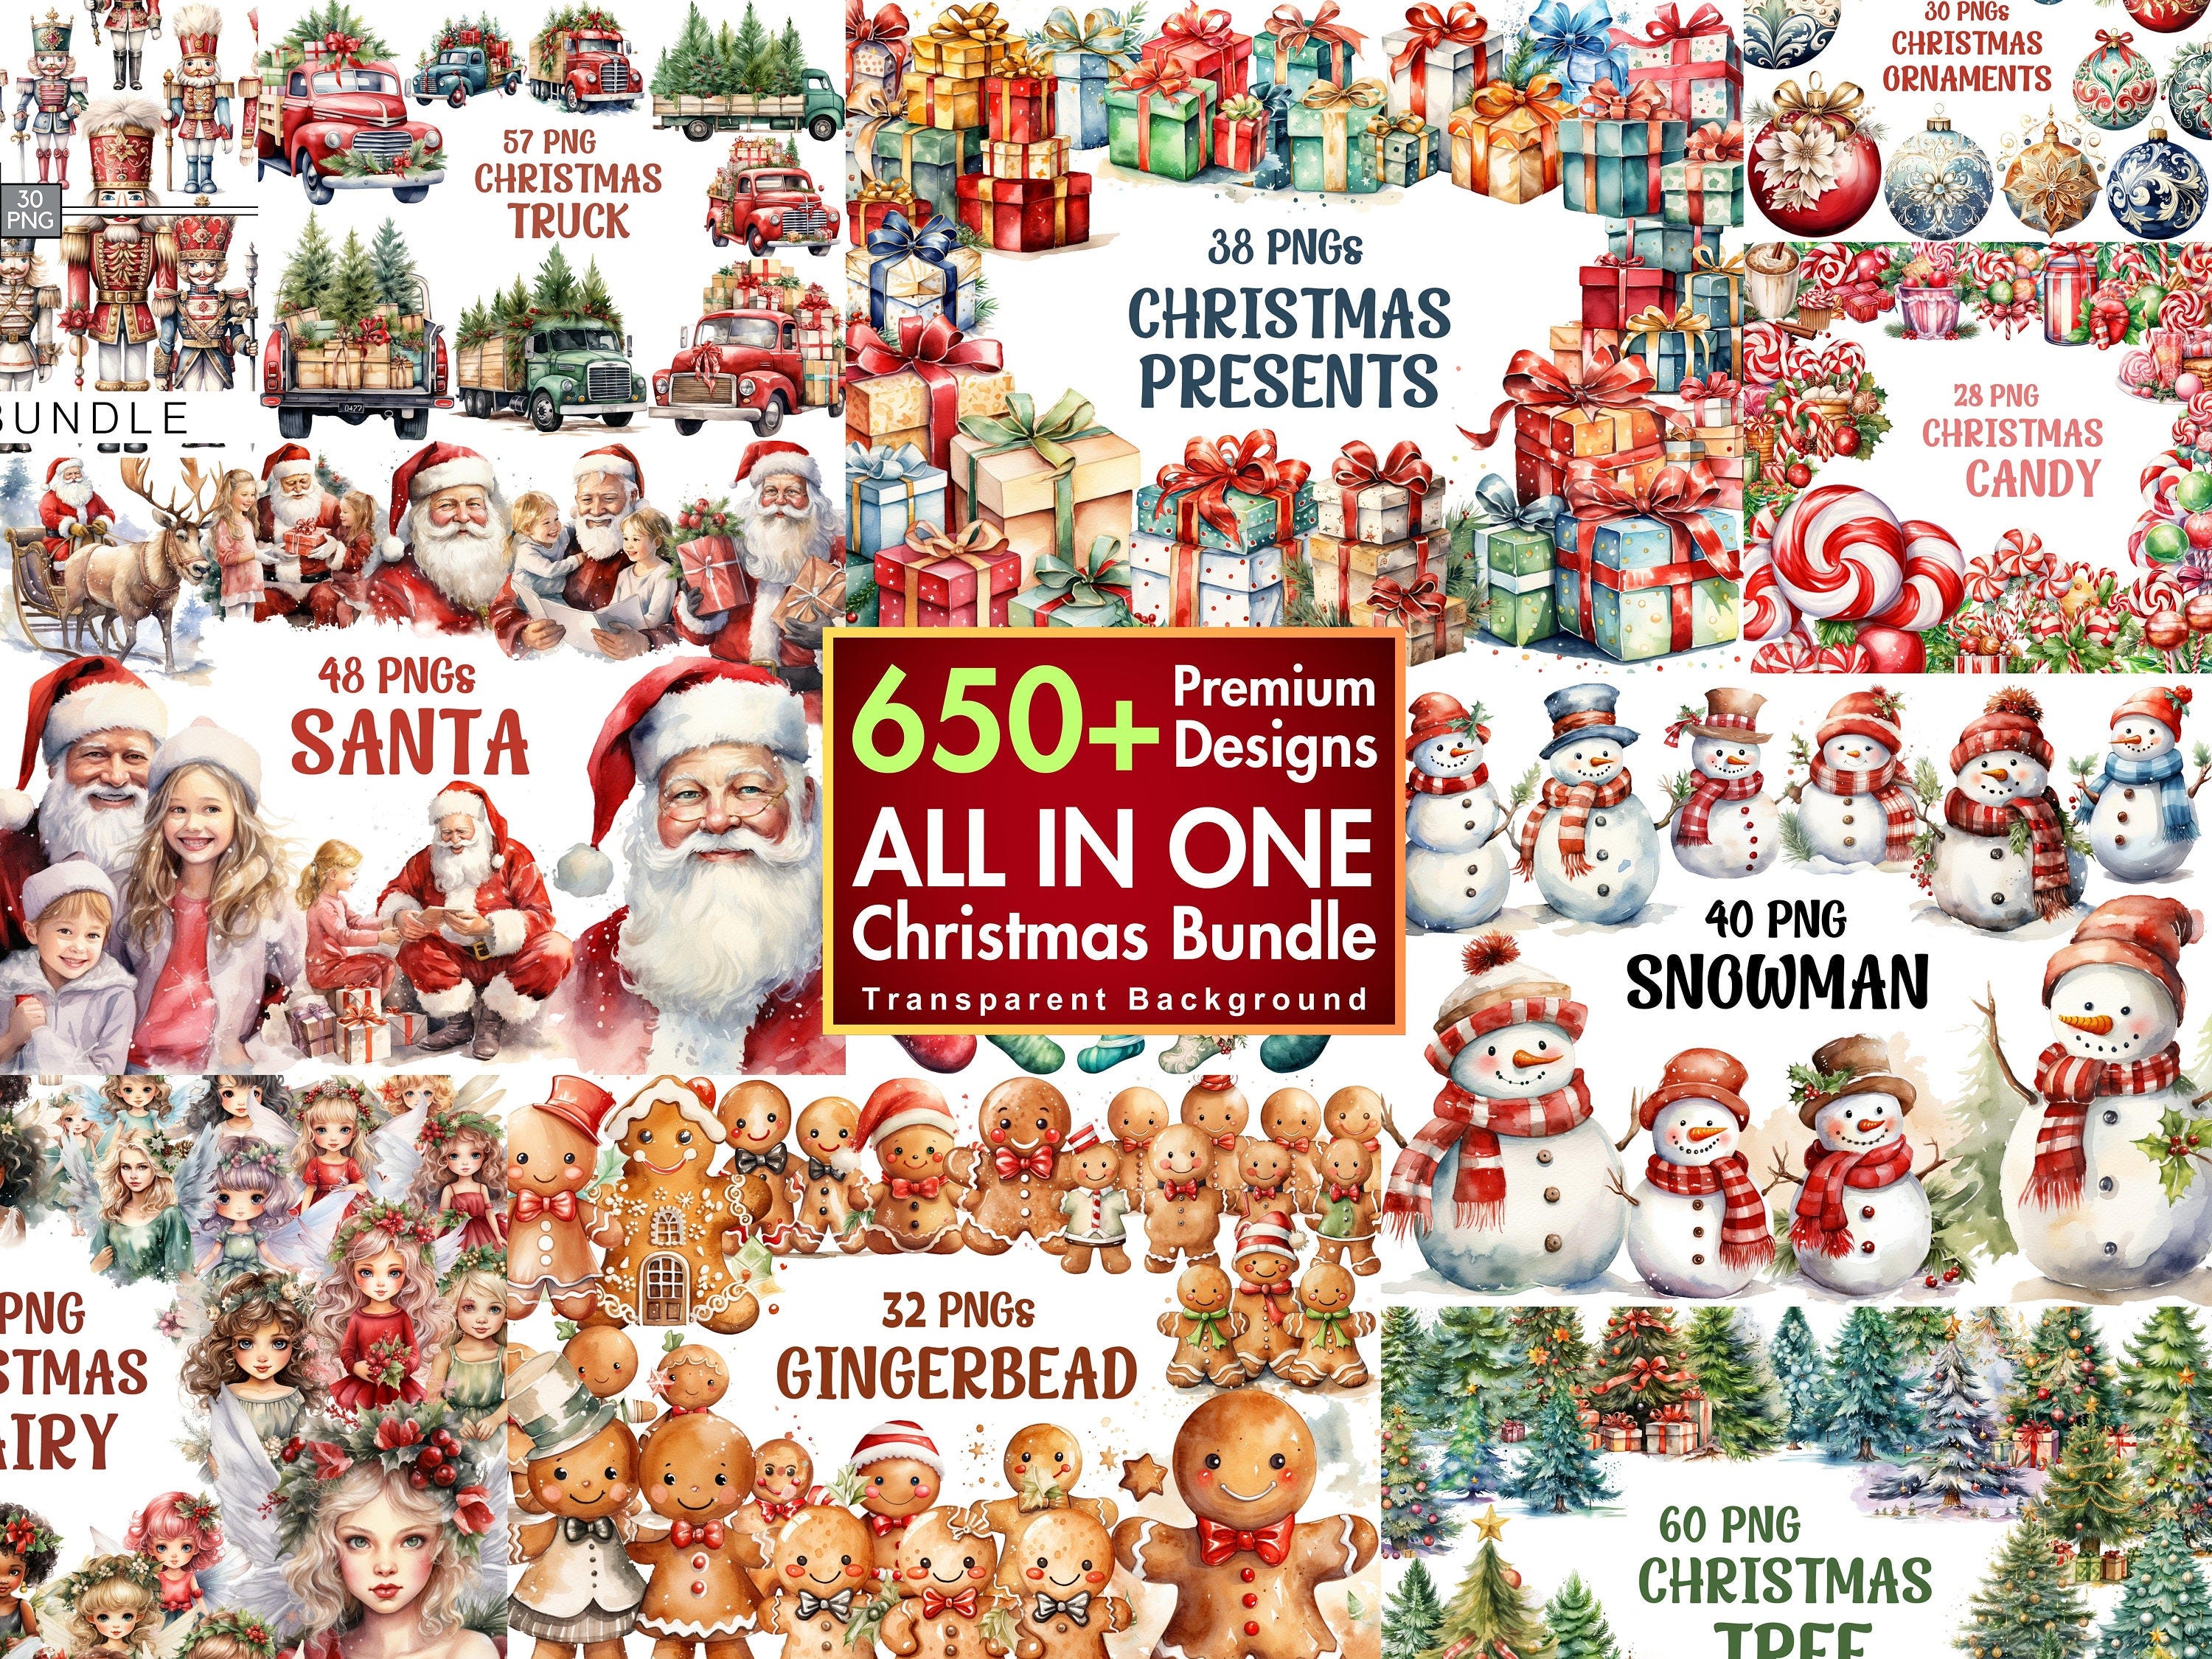 Watercolor Mega Christmas Clipart Bundle, Commercial Use, Transparent Background, 650+ Designs, Premium Package, All in one bundle